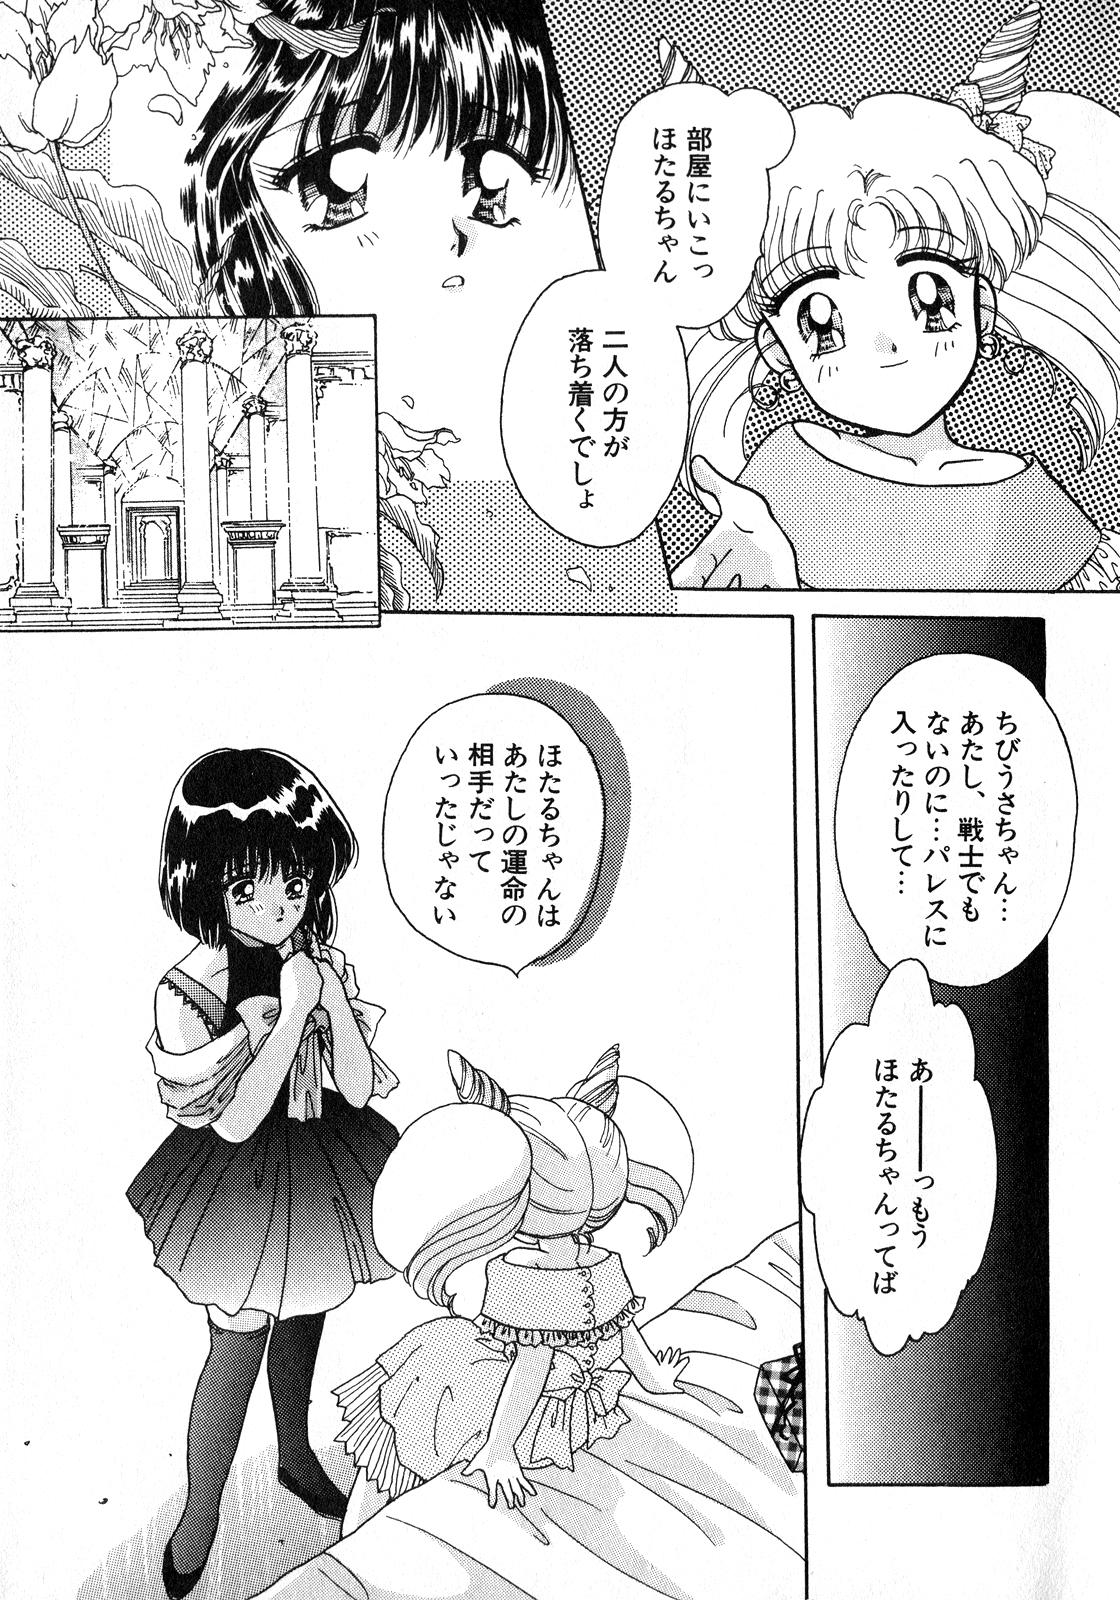 Ebony Lunatic Party 8 - Sailor moon Oil - Page 6